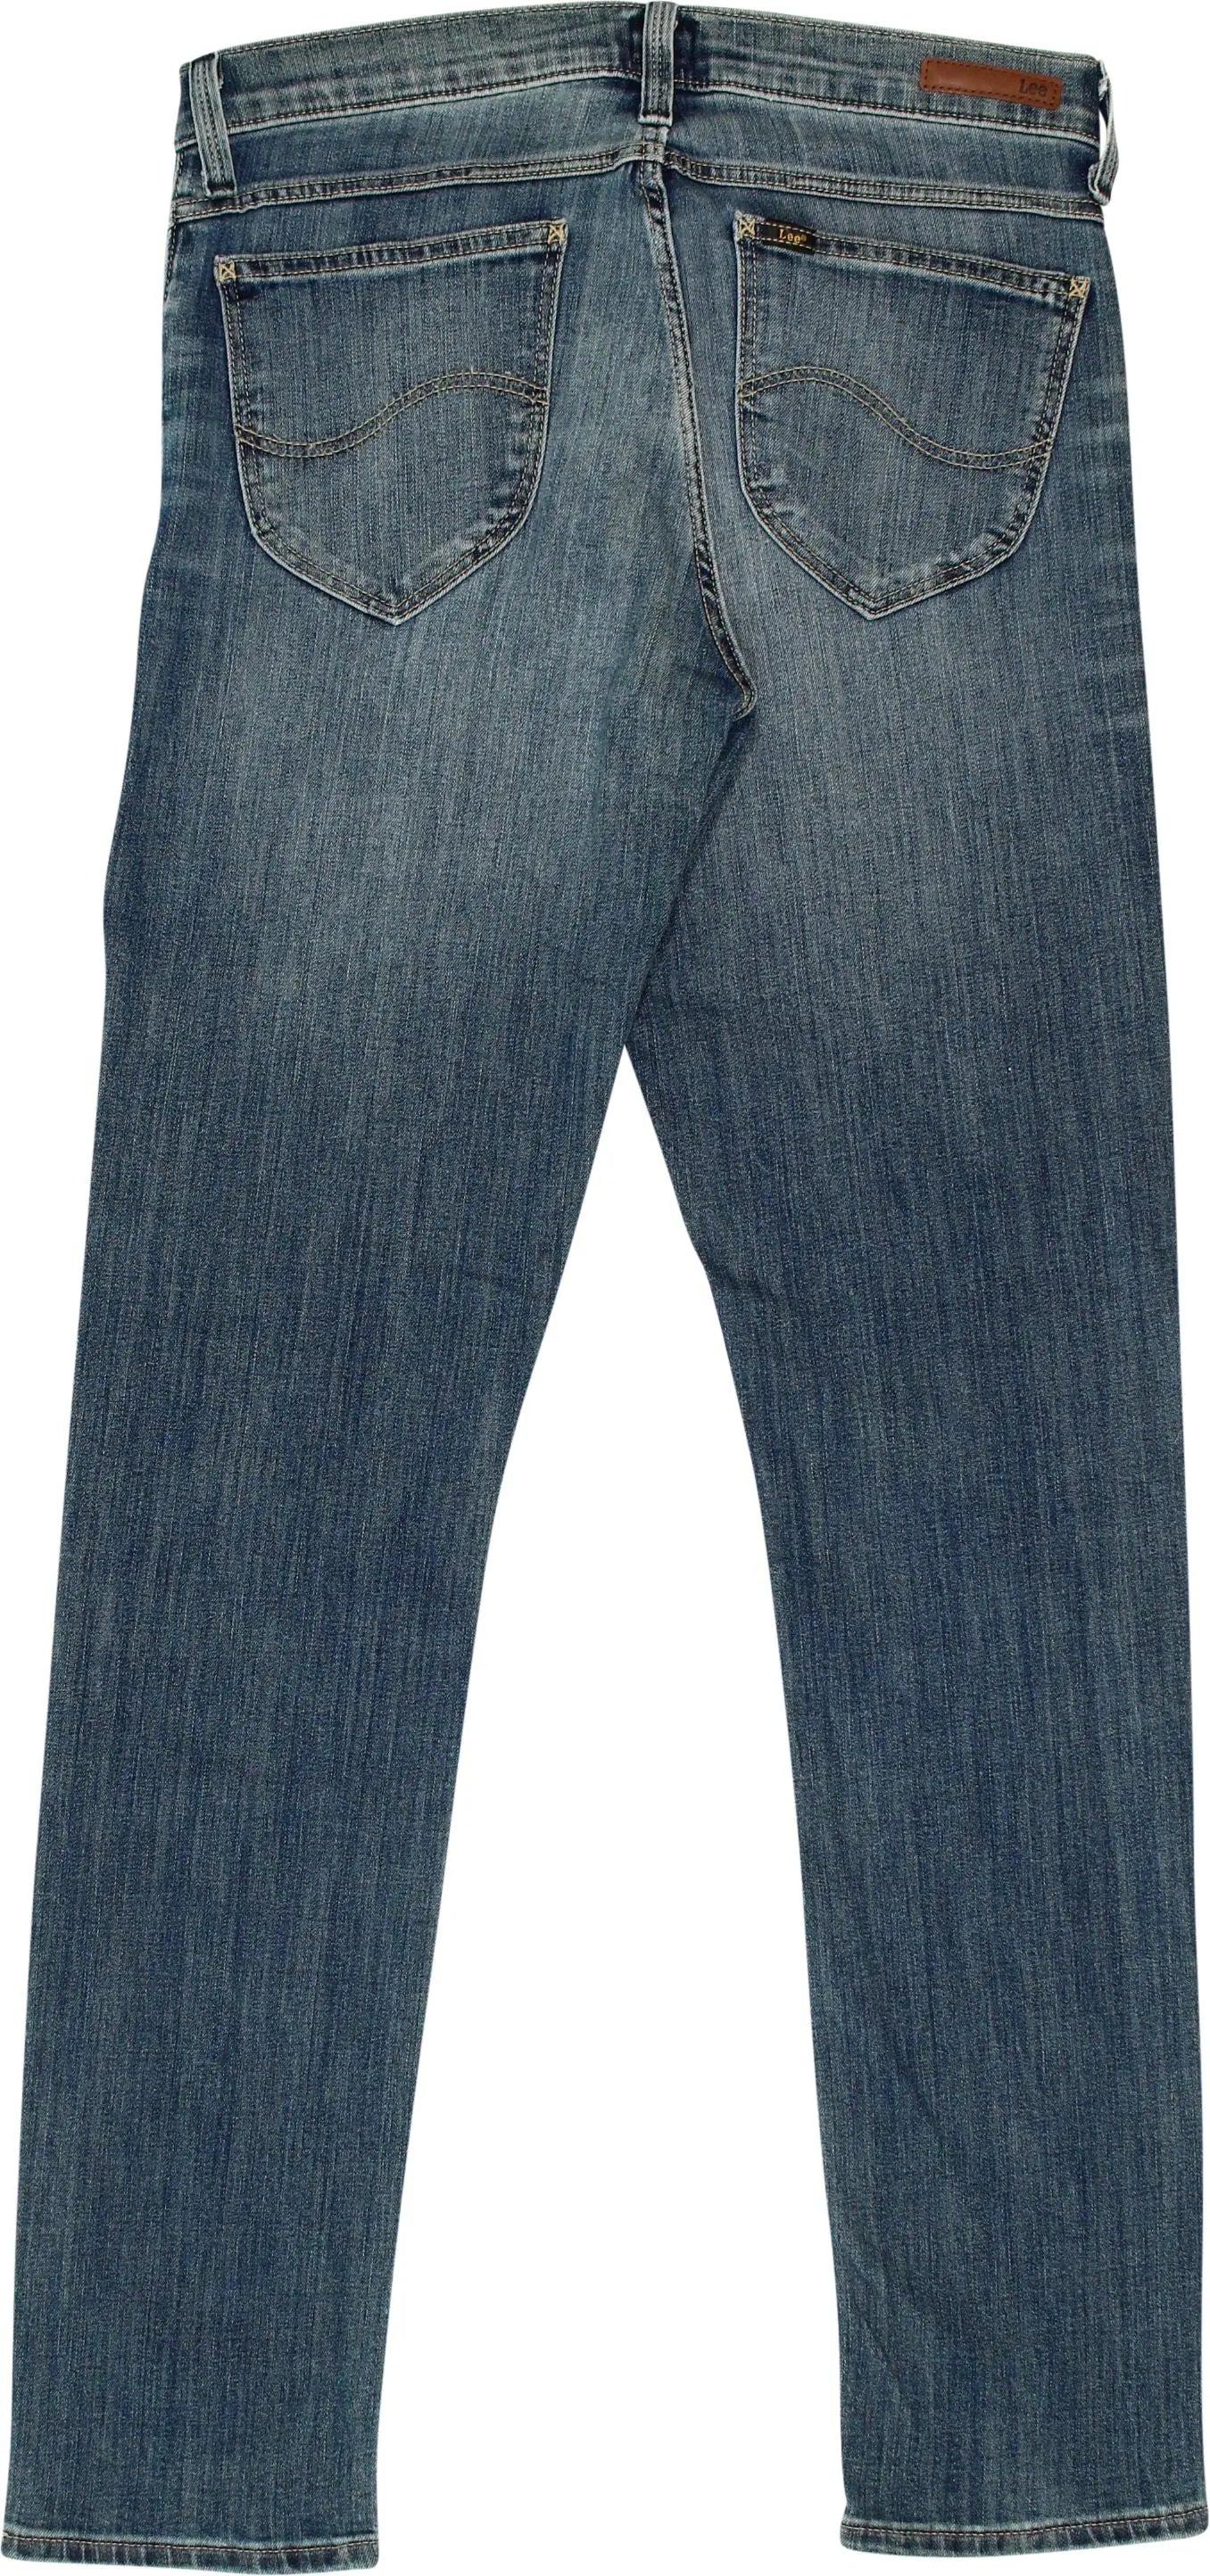 Lee - Lee Jade Skinny Jeans- ThriftTale.com - Vintage and second handclothing